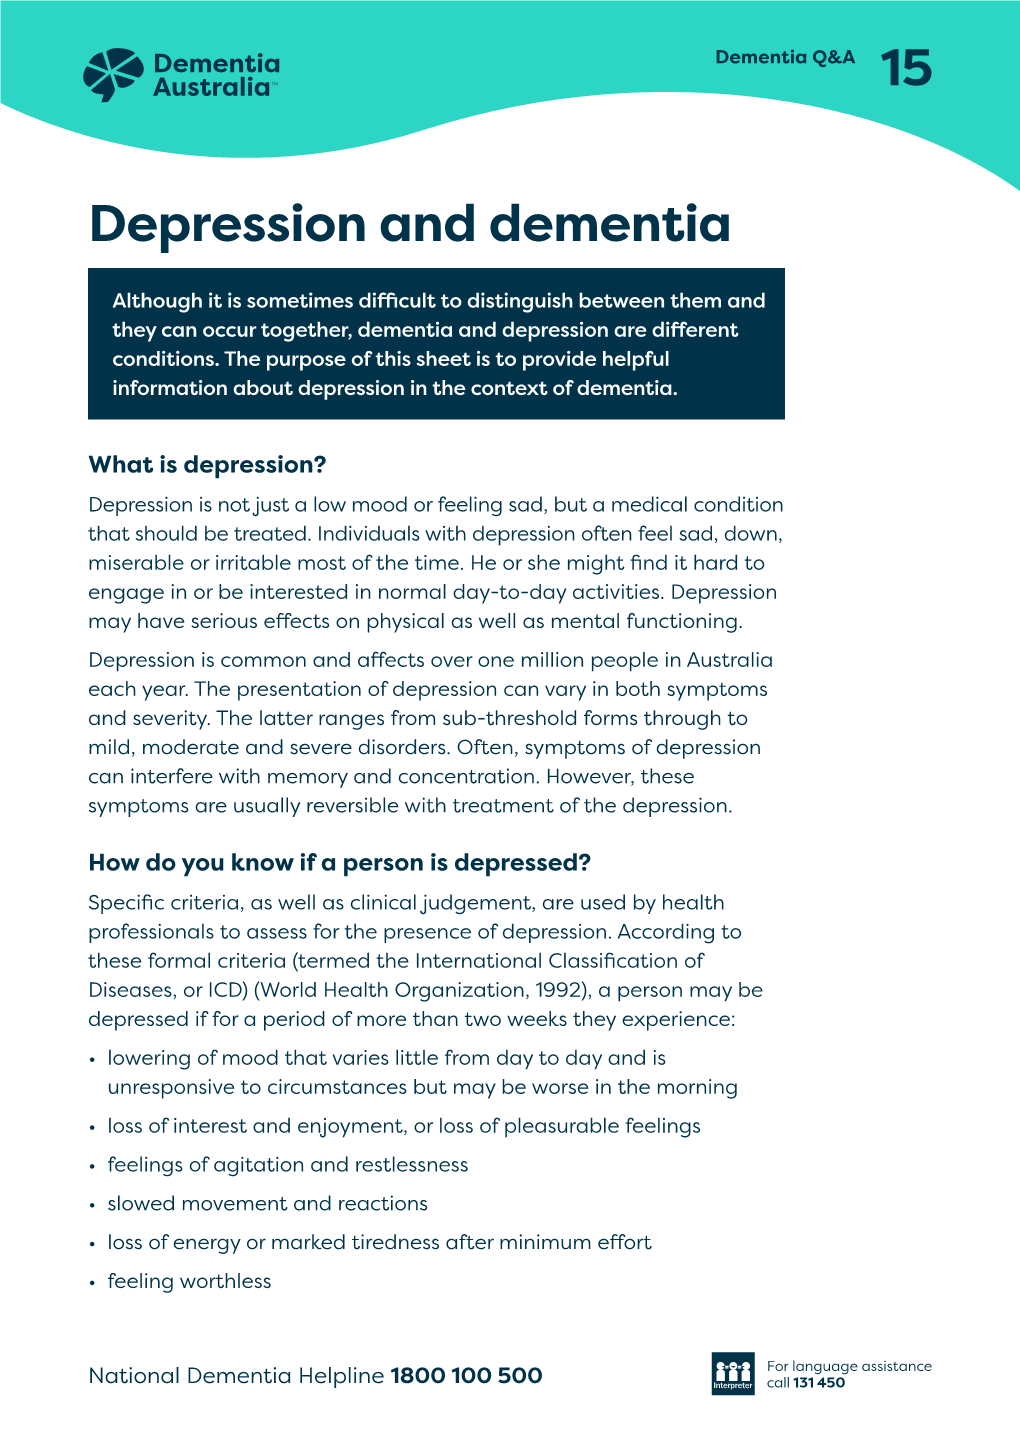 Depression and Dementia